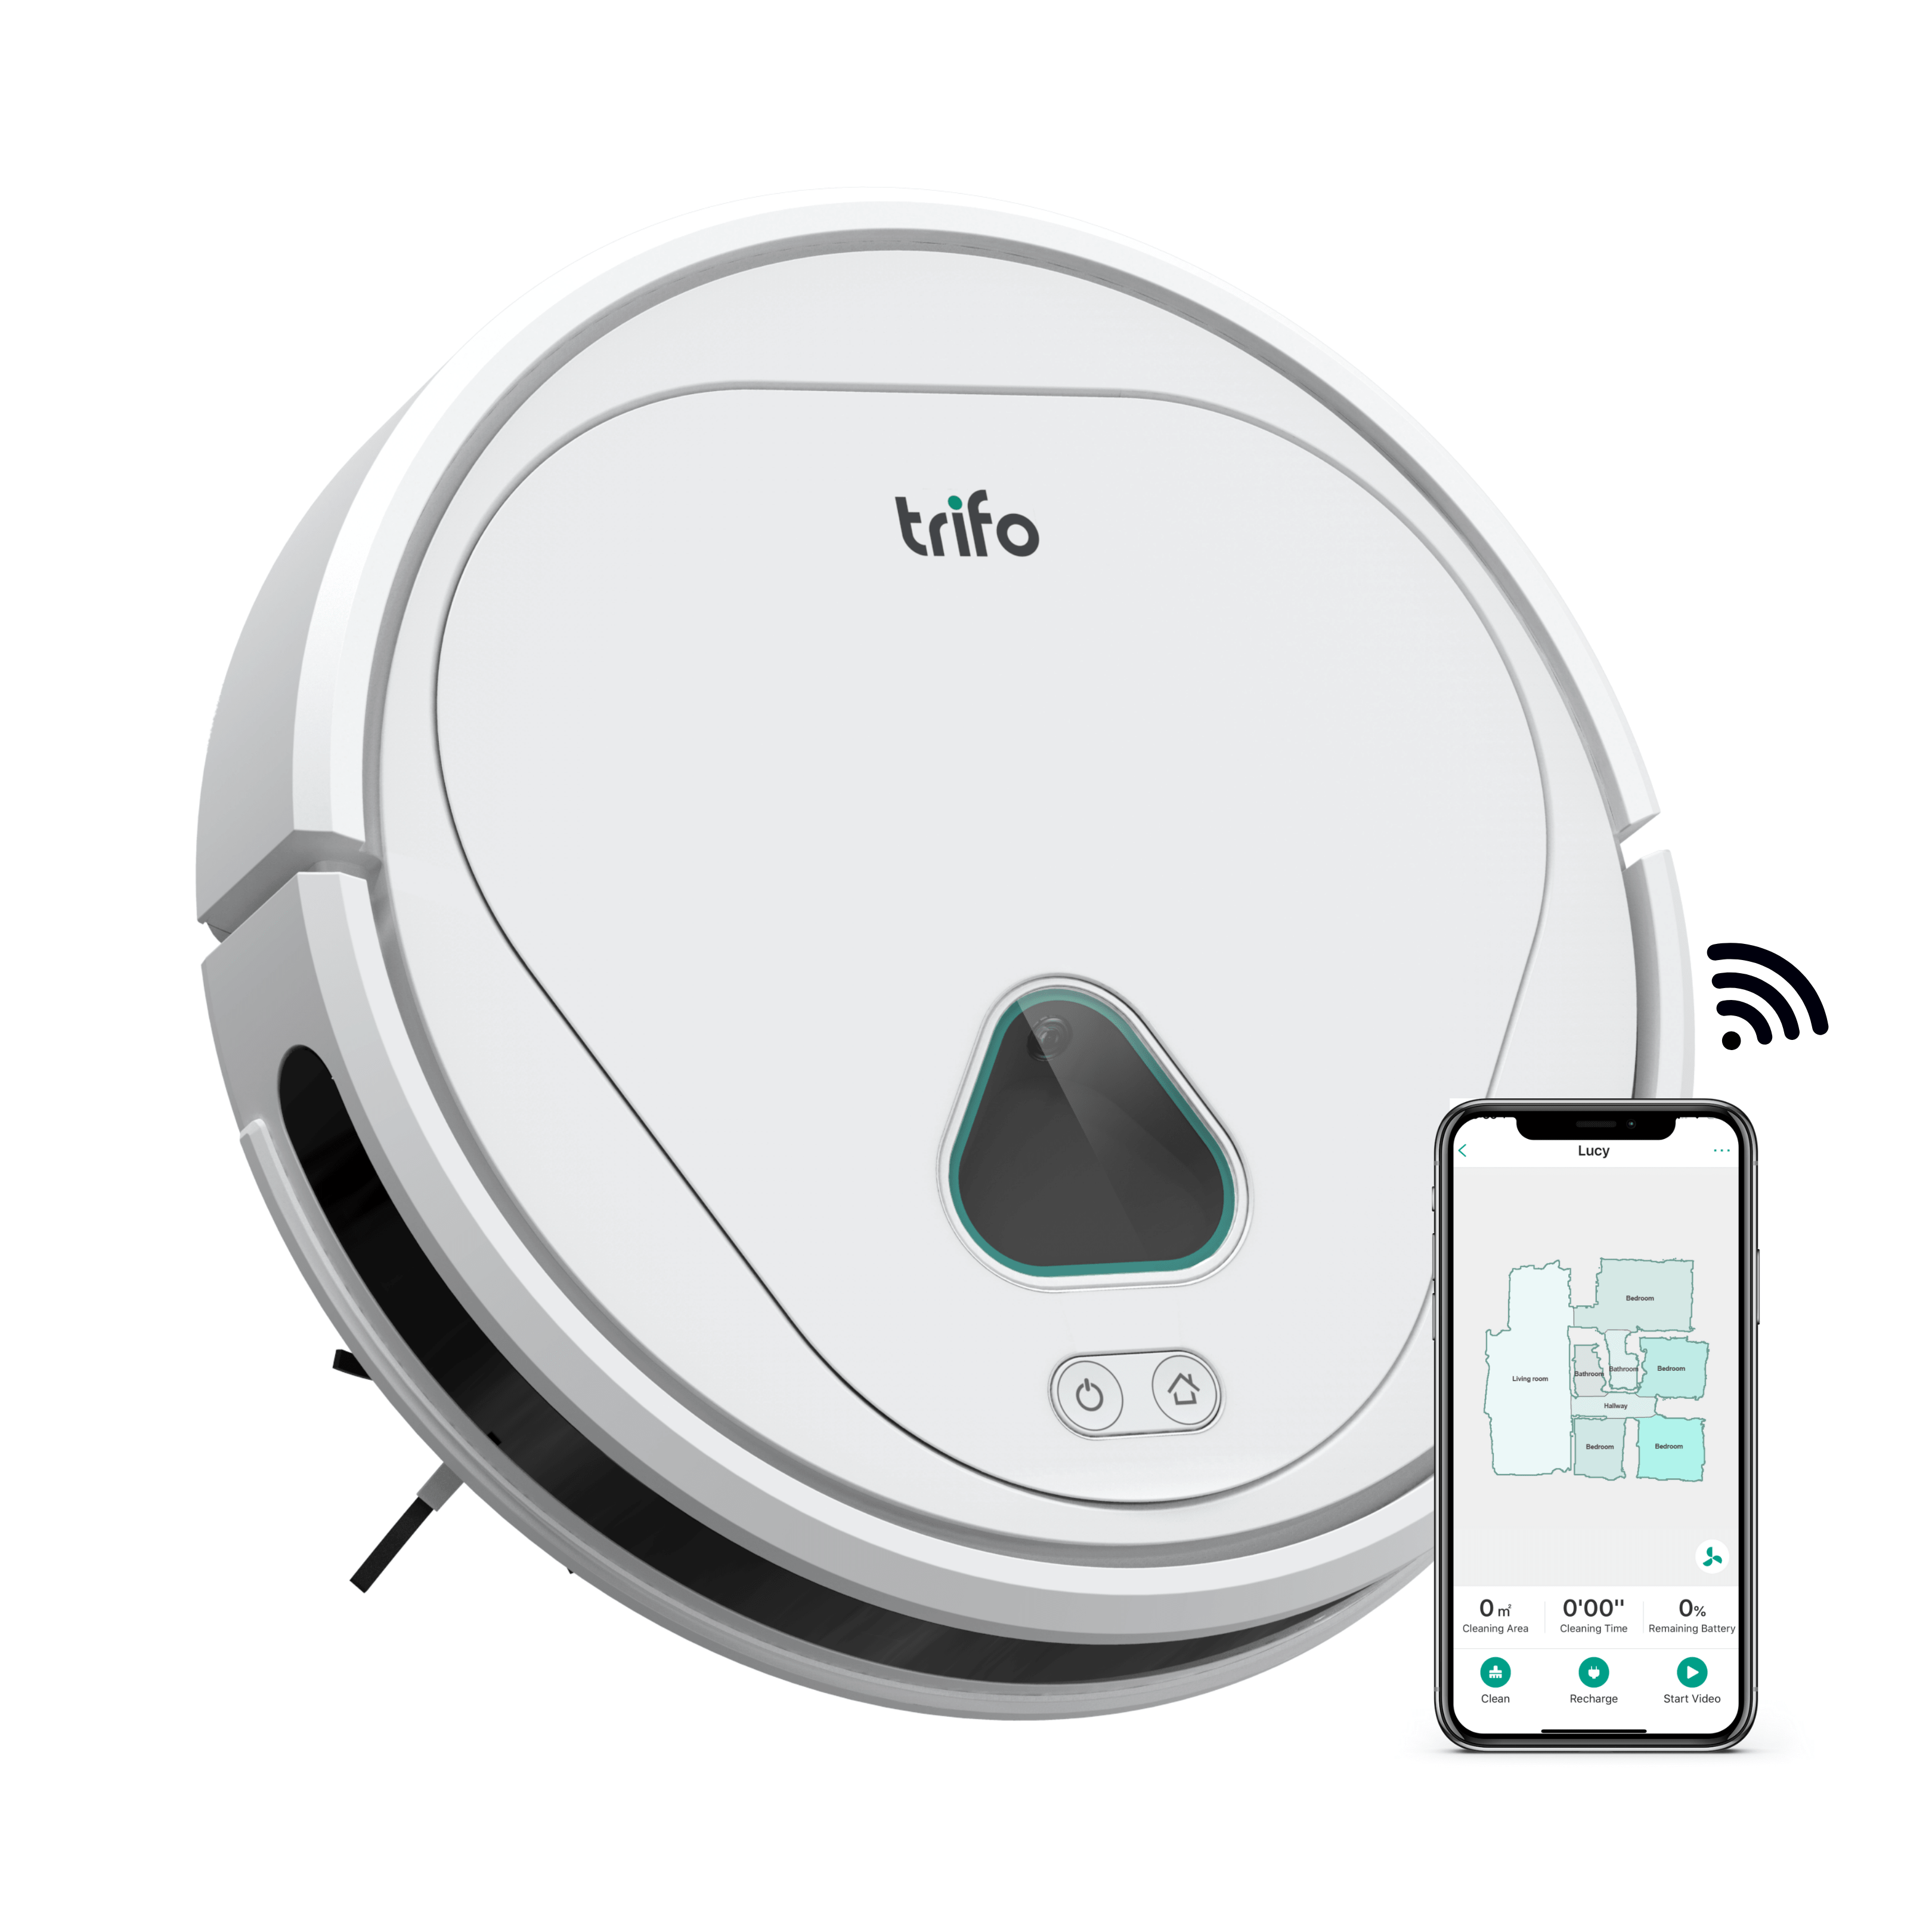 Trifo Max Home Surveillance Robot Vacuum - image 1 of 5